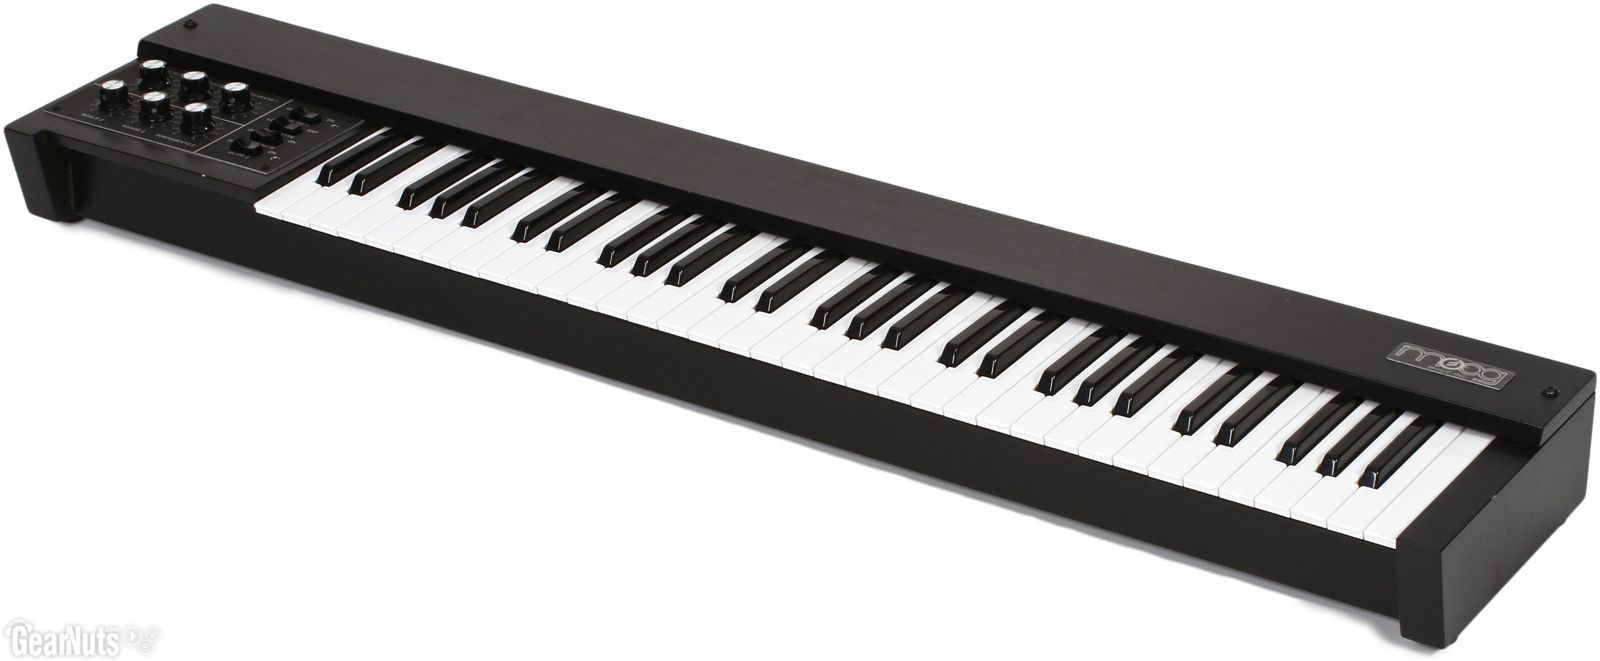 Moog 953 Duophonic 61 Note Keyboard - Black Cabinet по цене 157 580 ₽